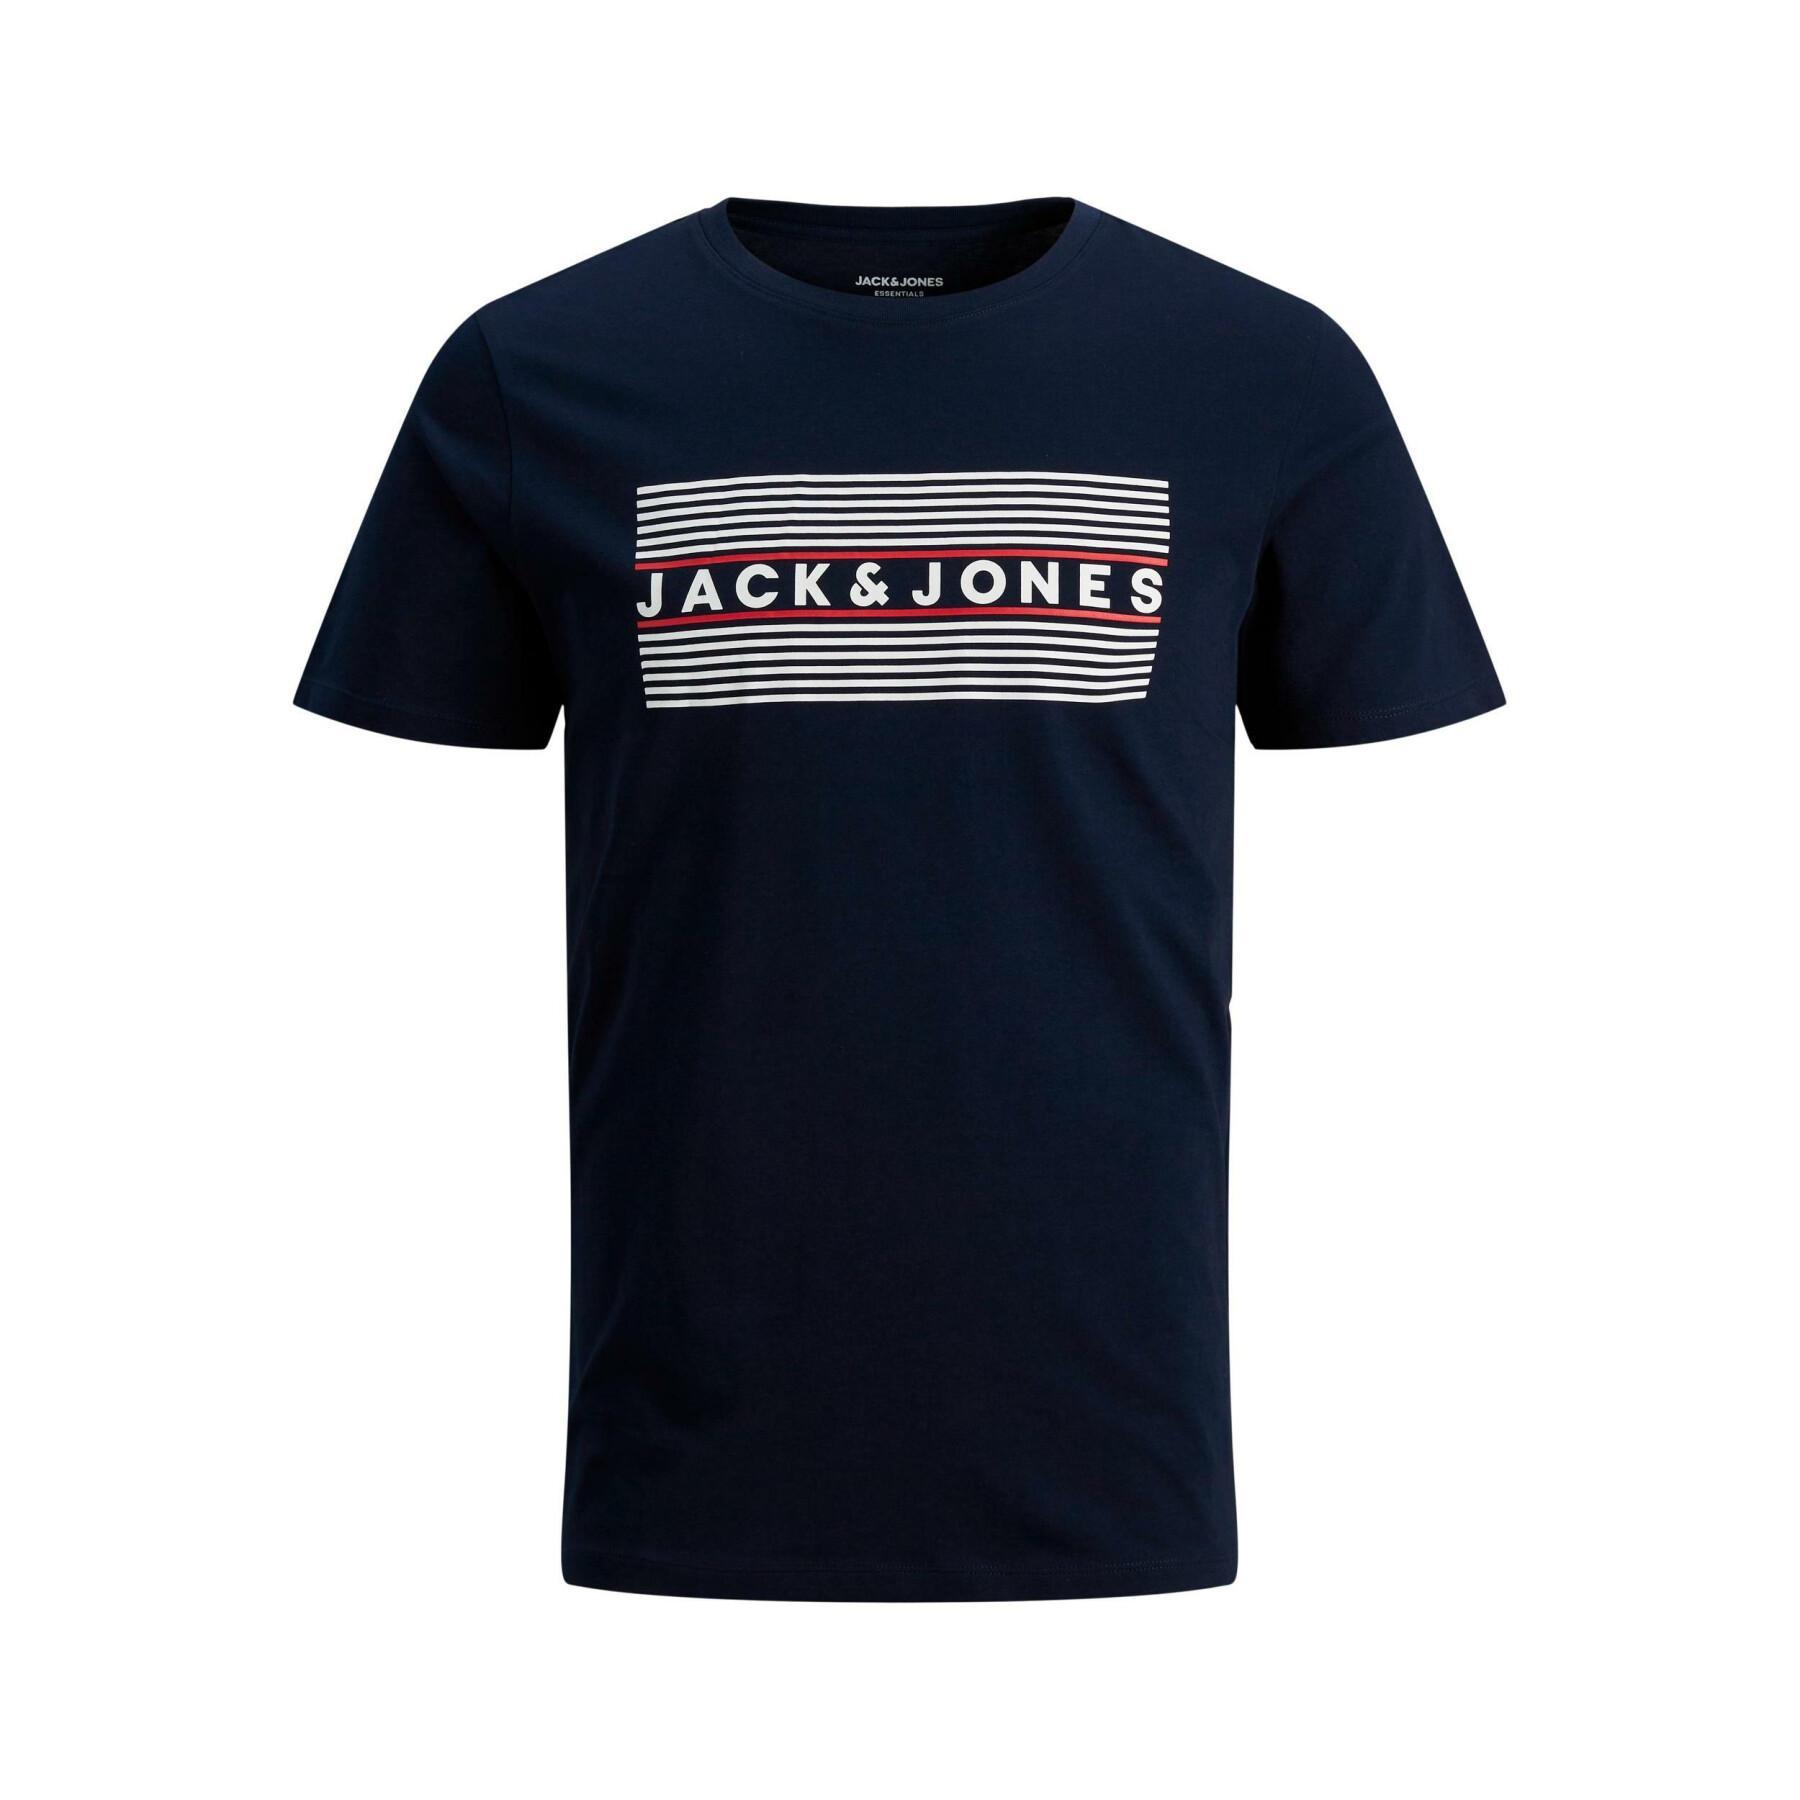 Child's T-shirt Jack & Jones corp logo